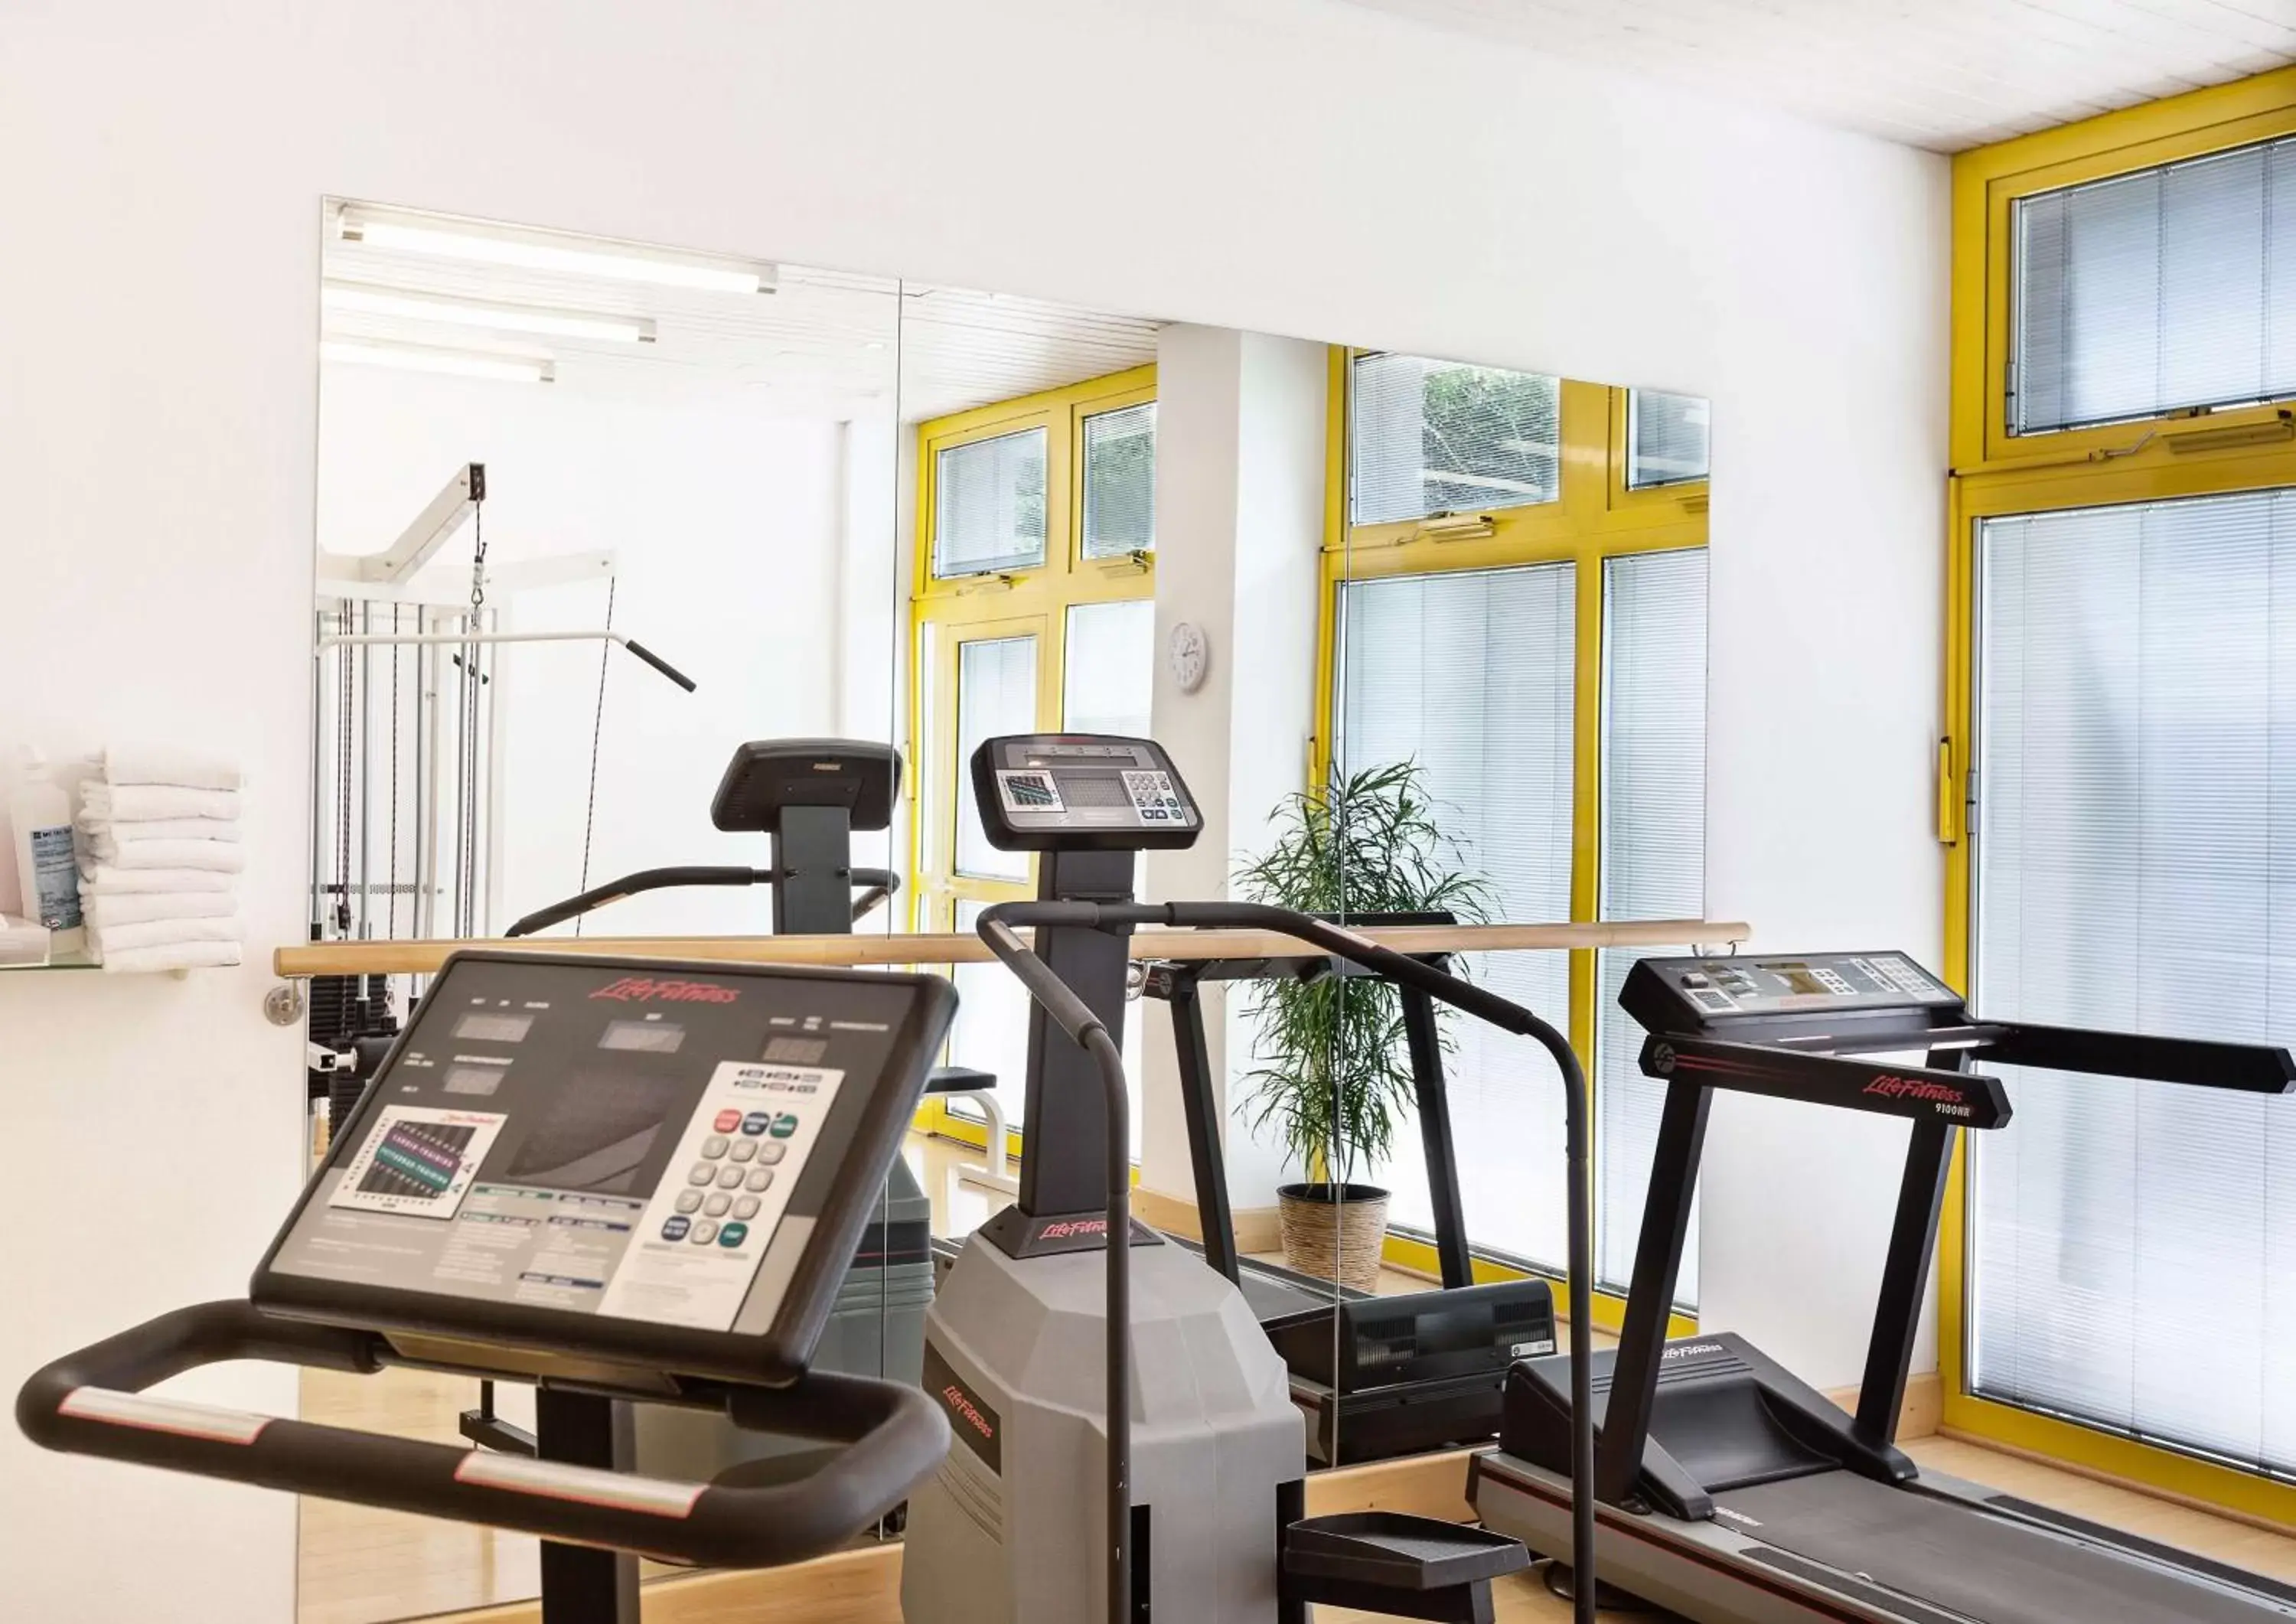 Fitness centre/facilities, Fitness Center/Facilities in Best Western Premier Grand Hotel Russischer Hof